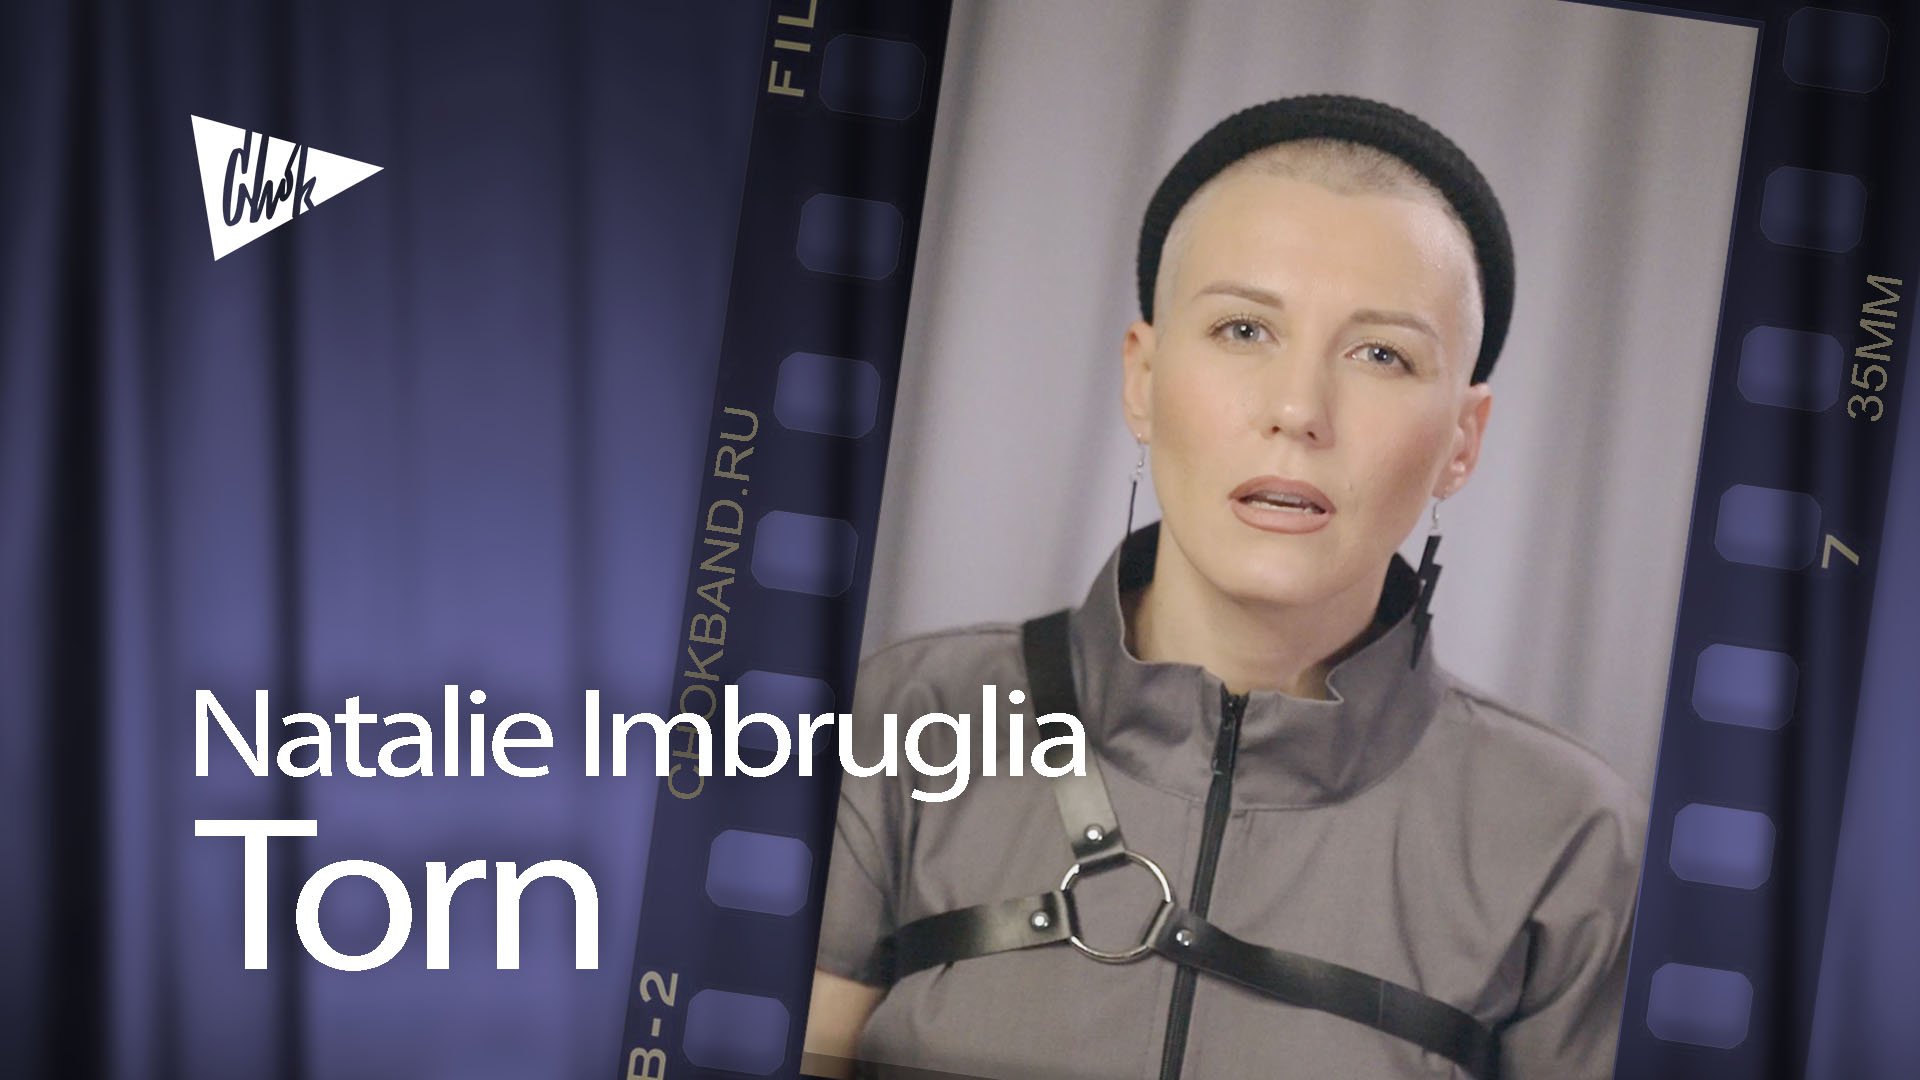 Natalie Imbruglia - Torn (Chok cover)